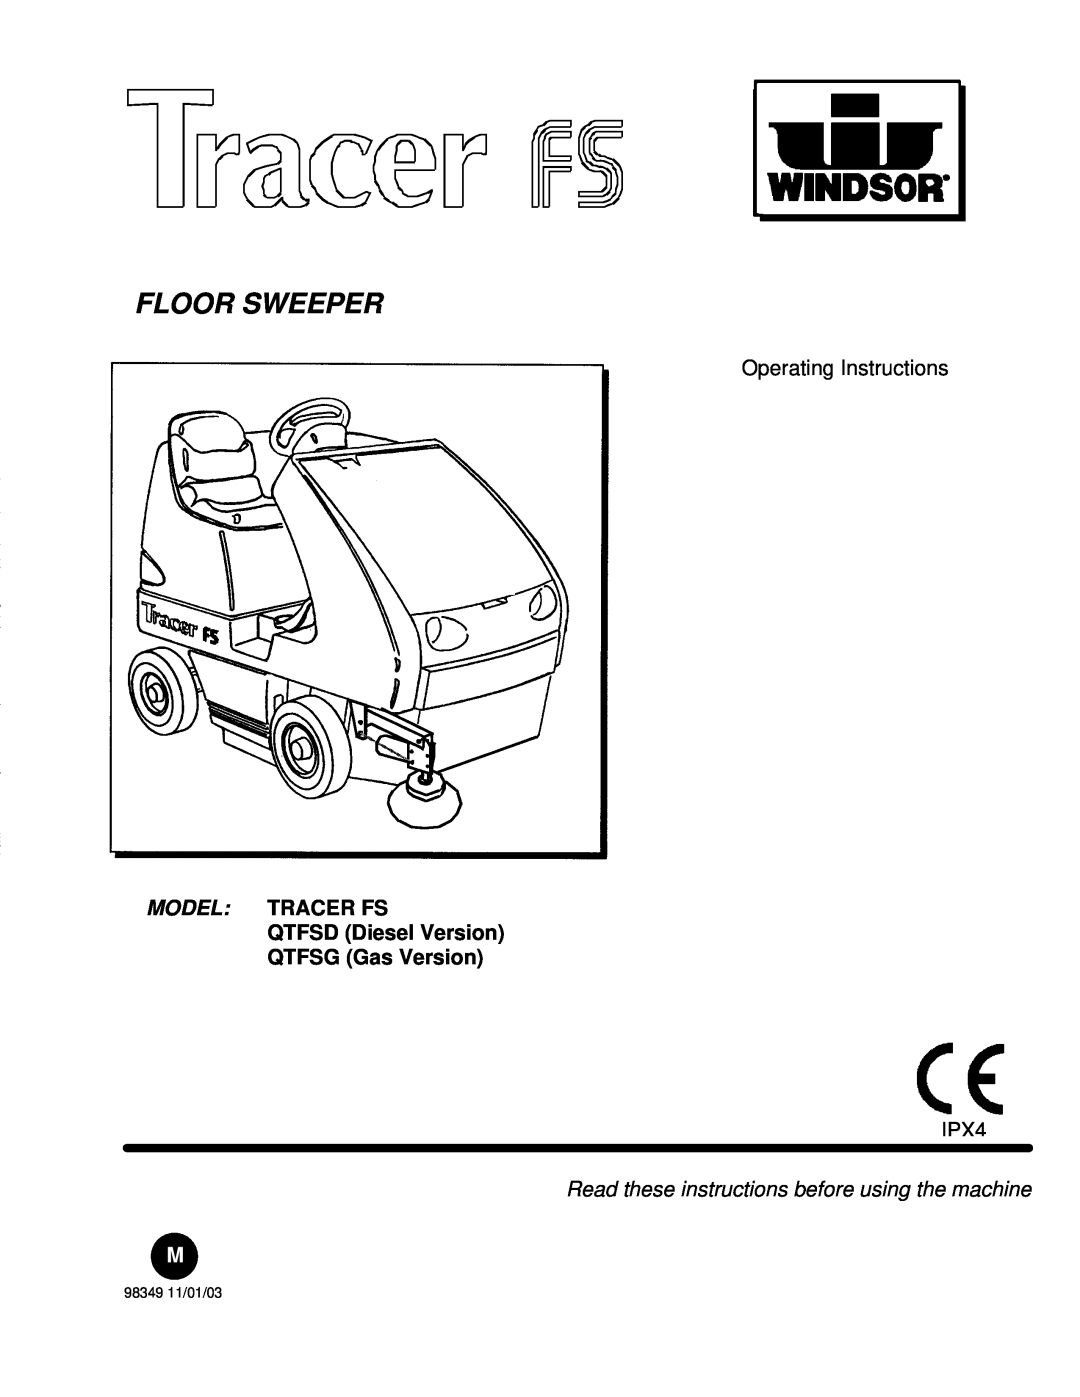 Windsor manual Floor Sweeper, MODEL TRACER FS QTFSD Diesel Version, QTFSG Gas Version 